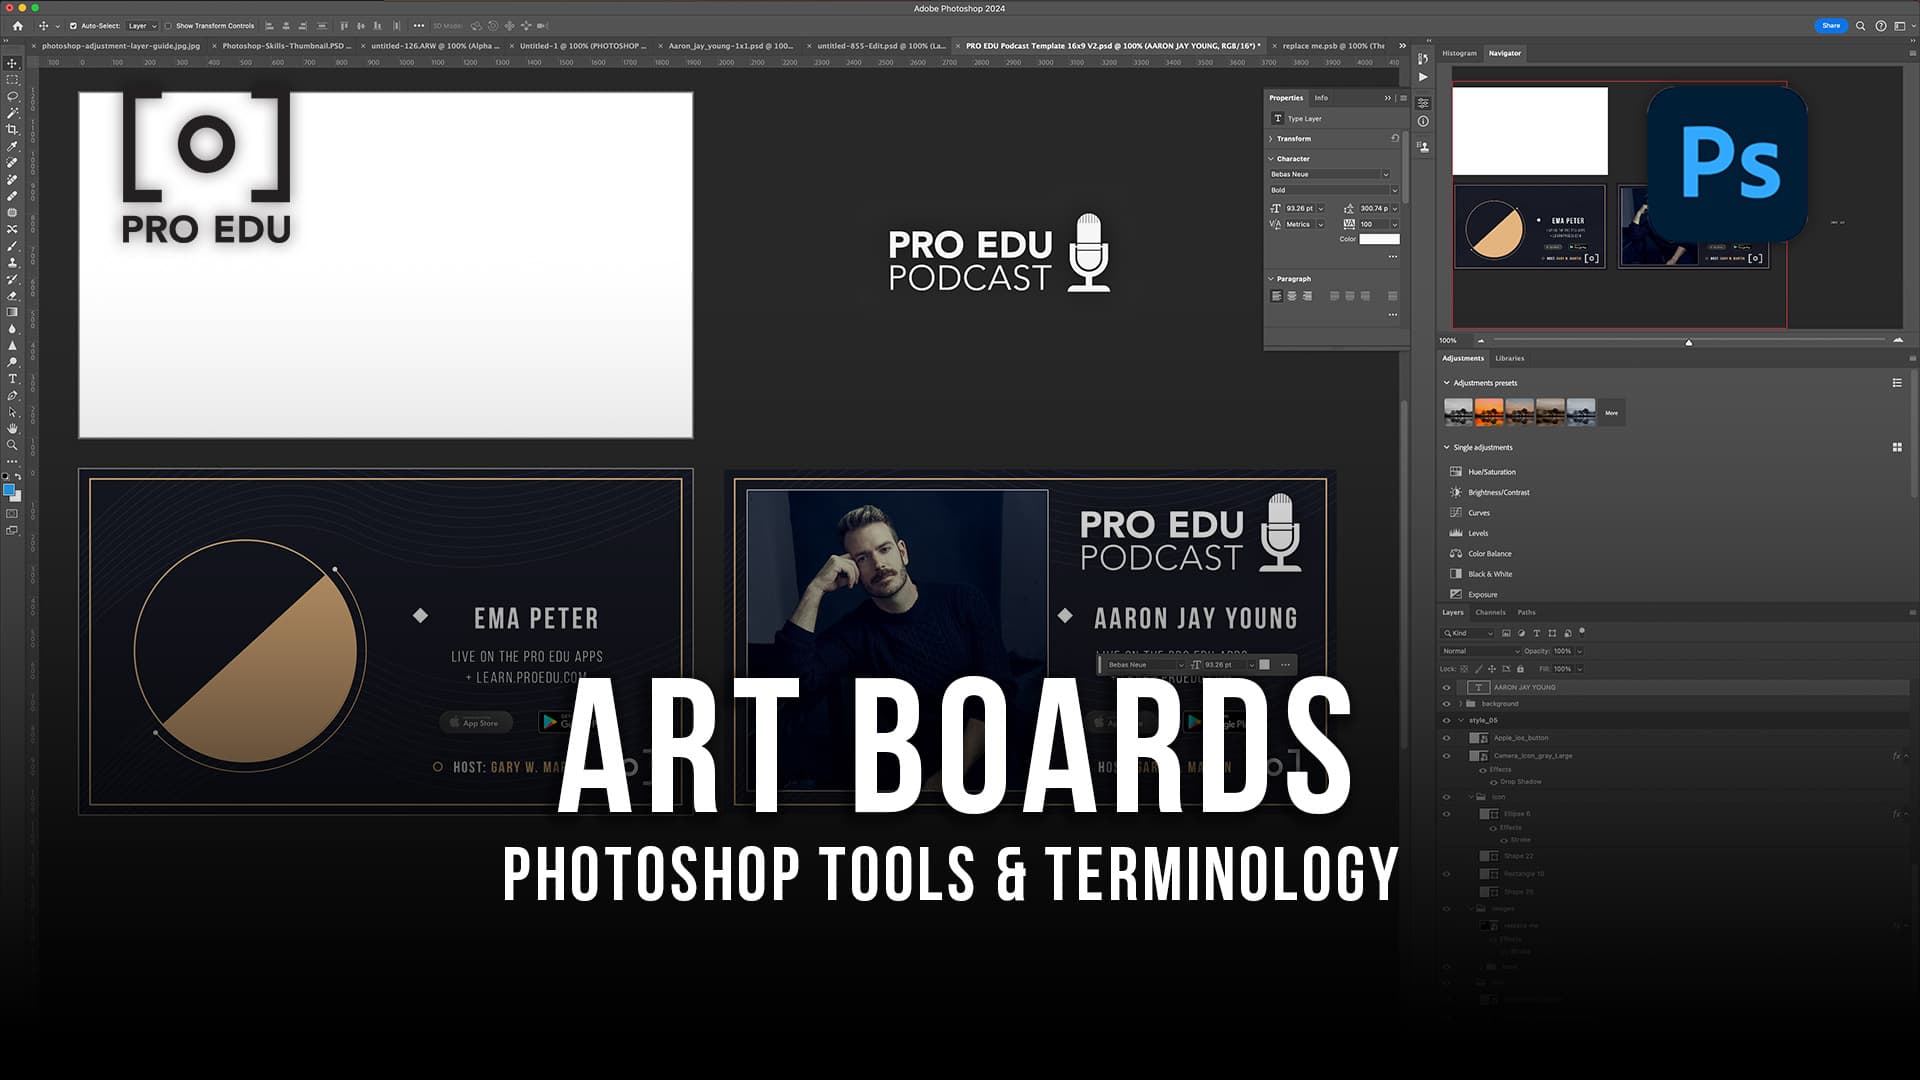 Artboard Features in Photoshop - PRO EDU Tutorial